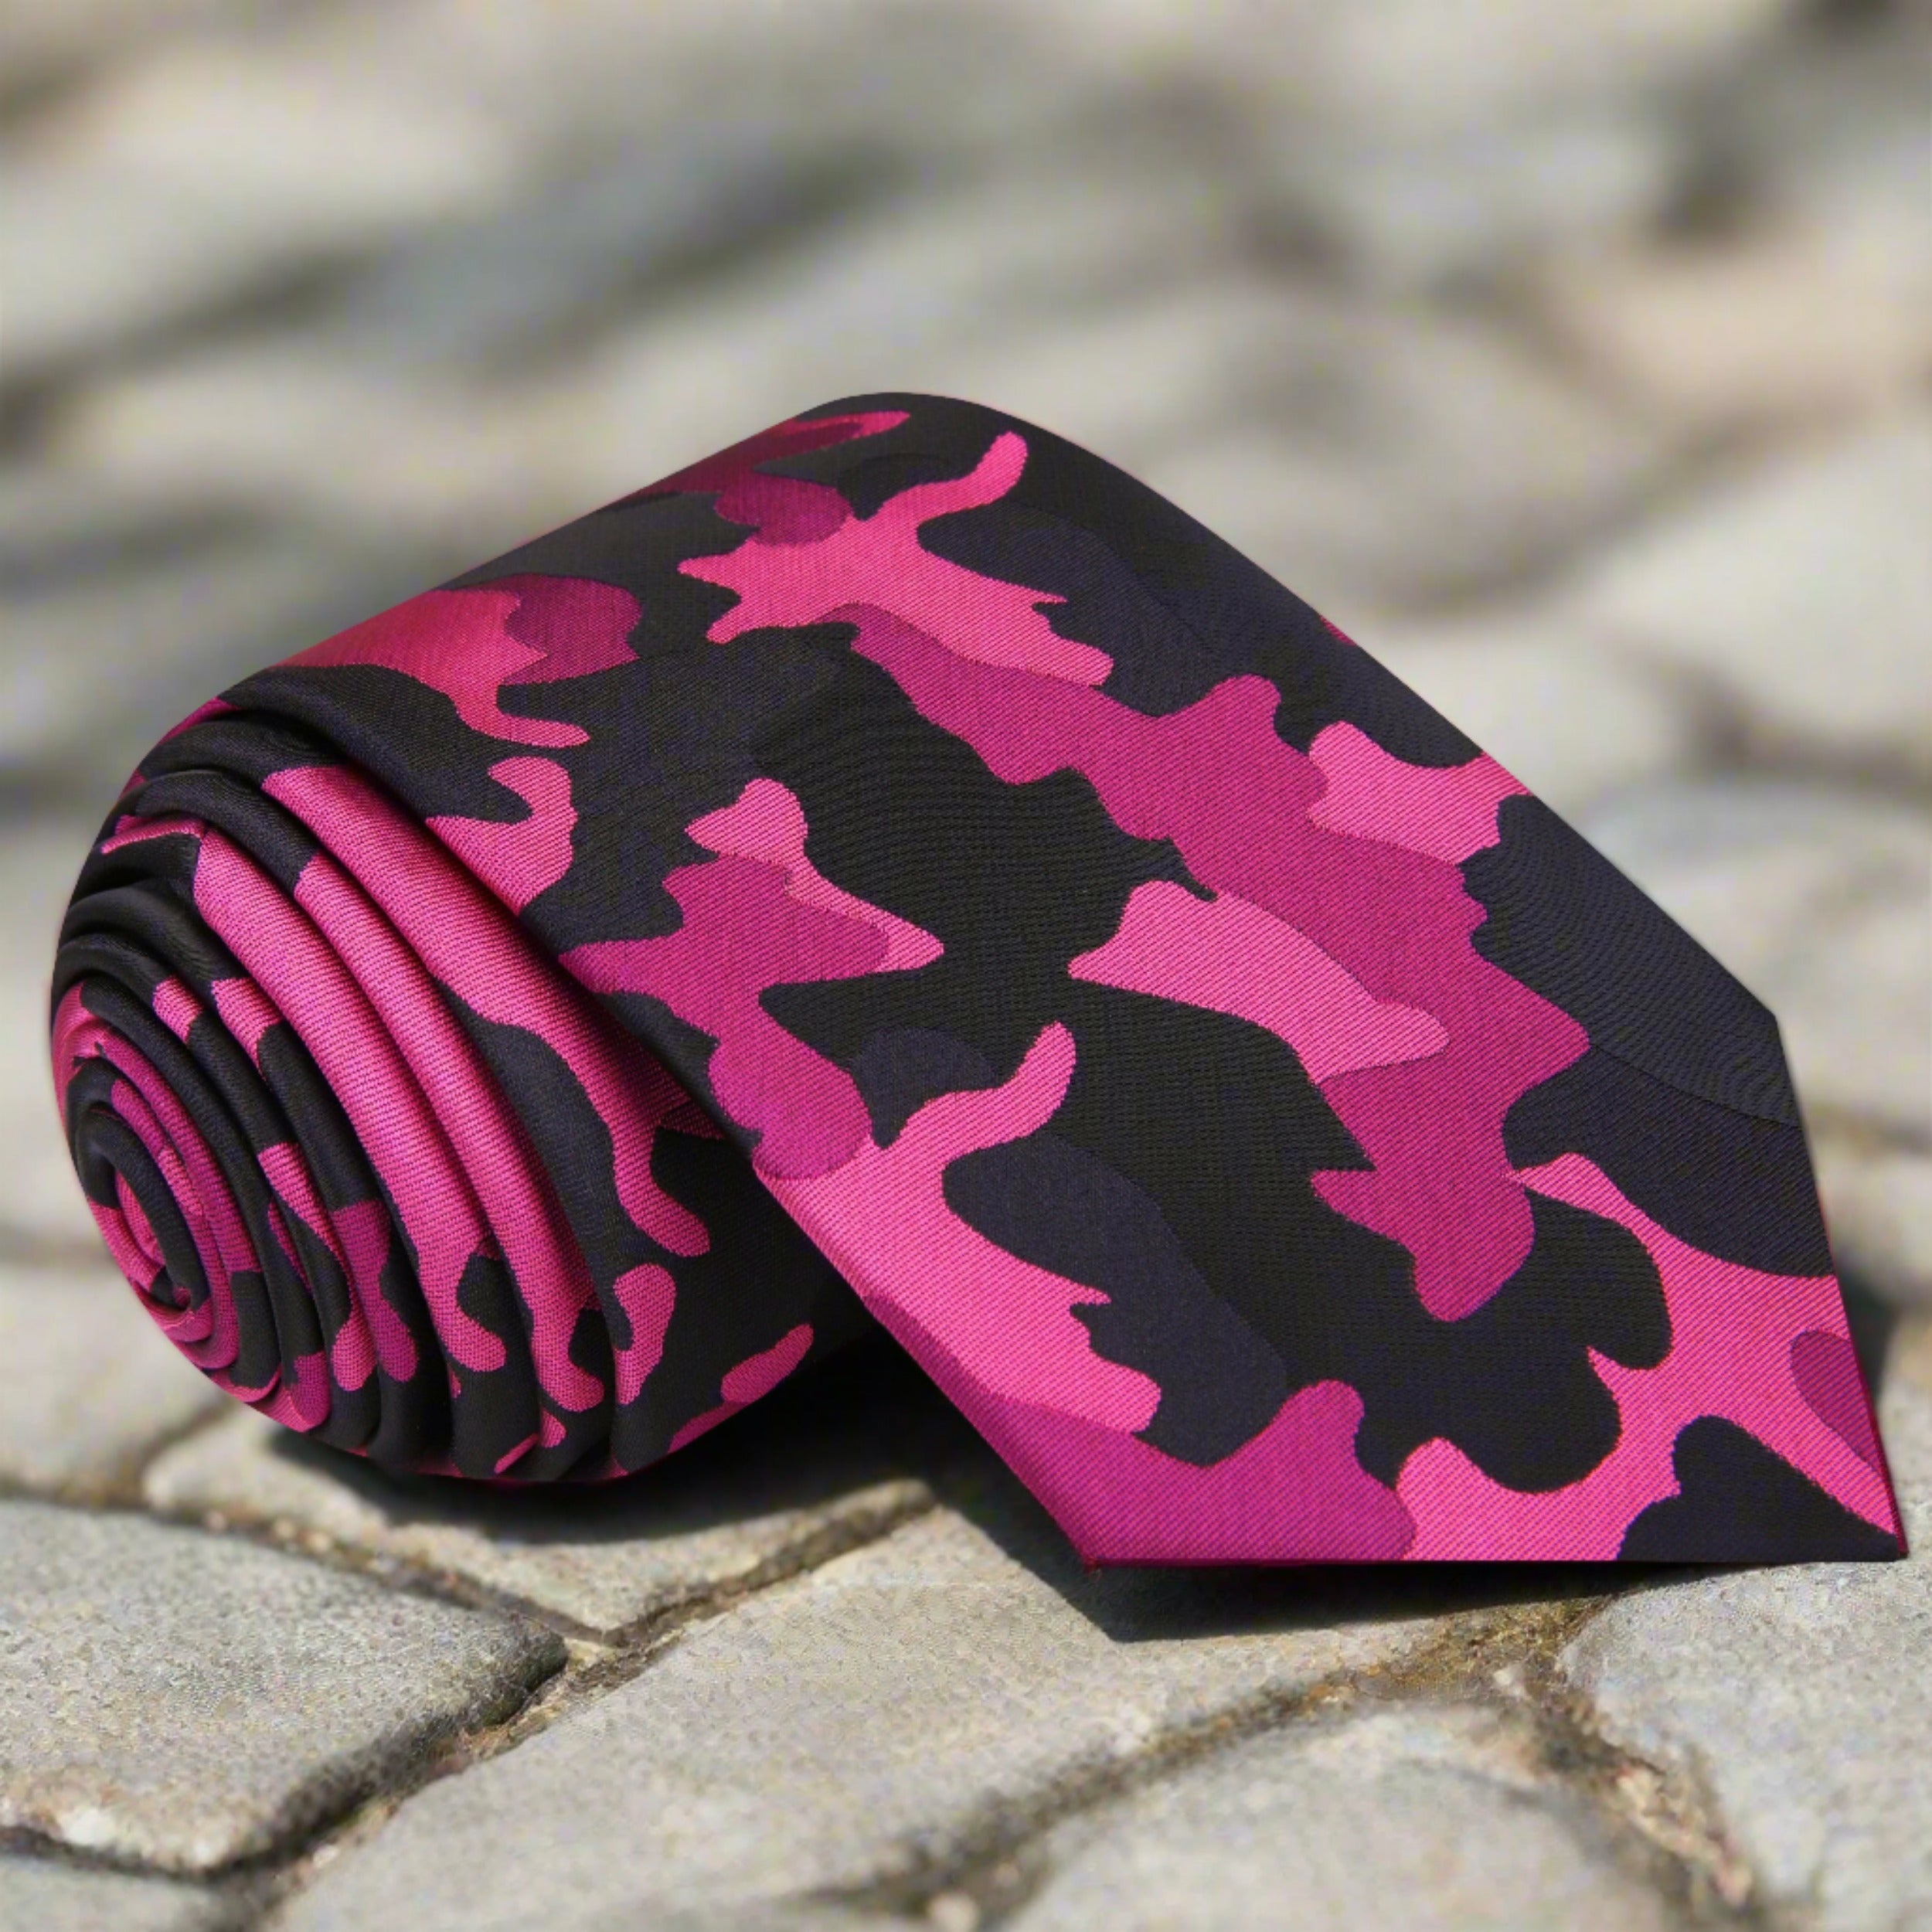 Camouflage Tie Dye - Make